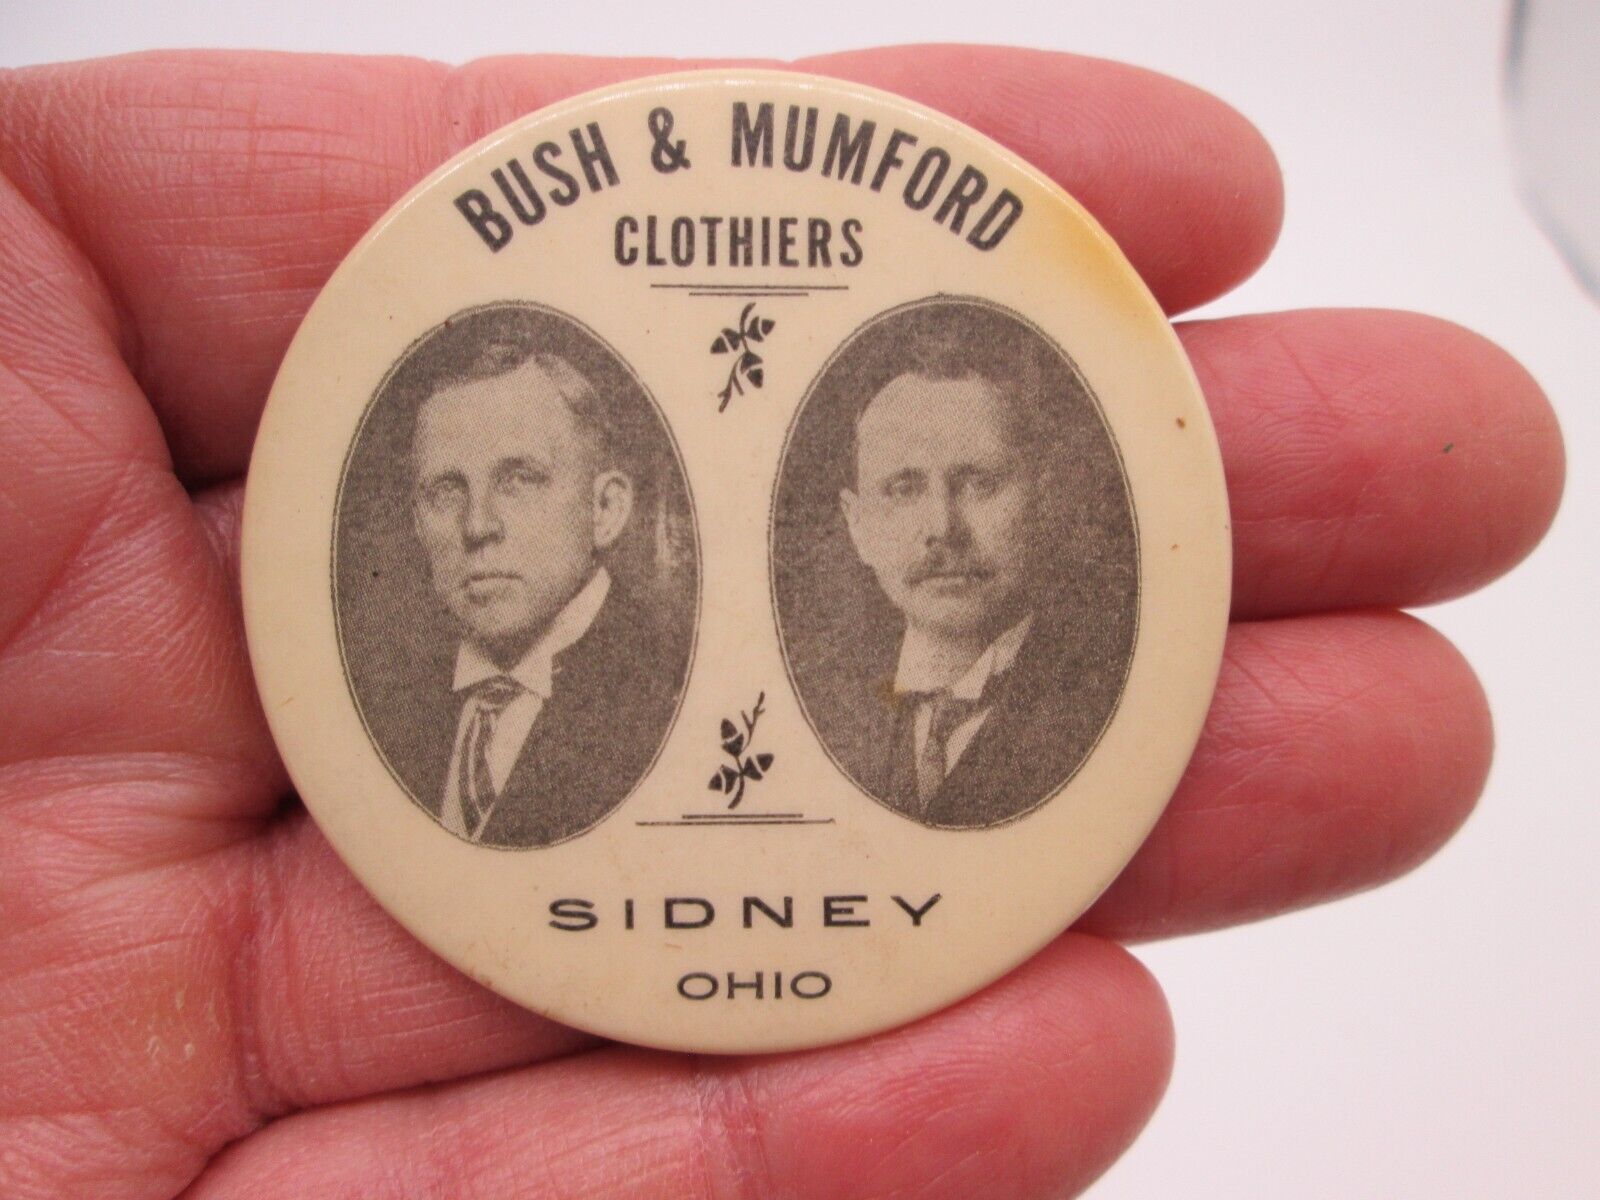 Antique, Advertising Pocket Mirror, Bush & Mumford Clothiers, Sidney, Ohio